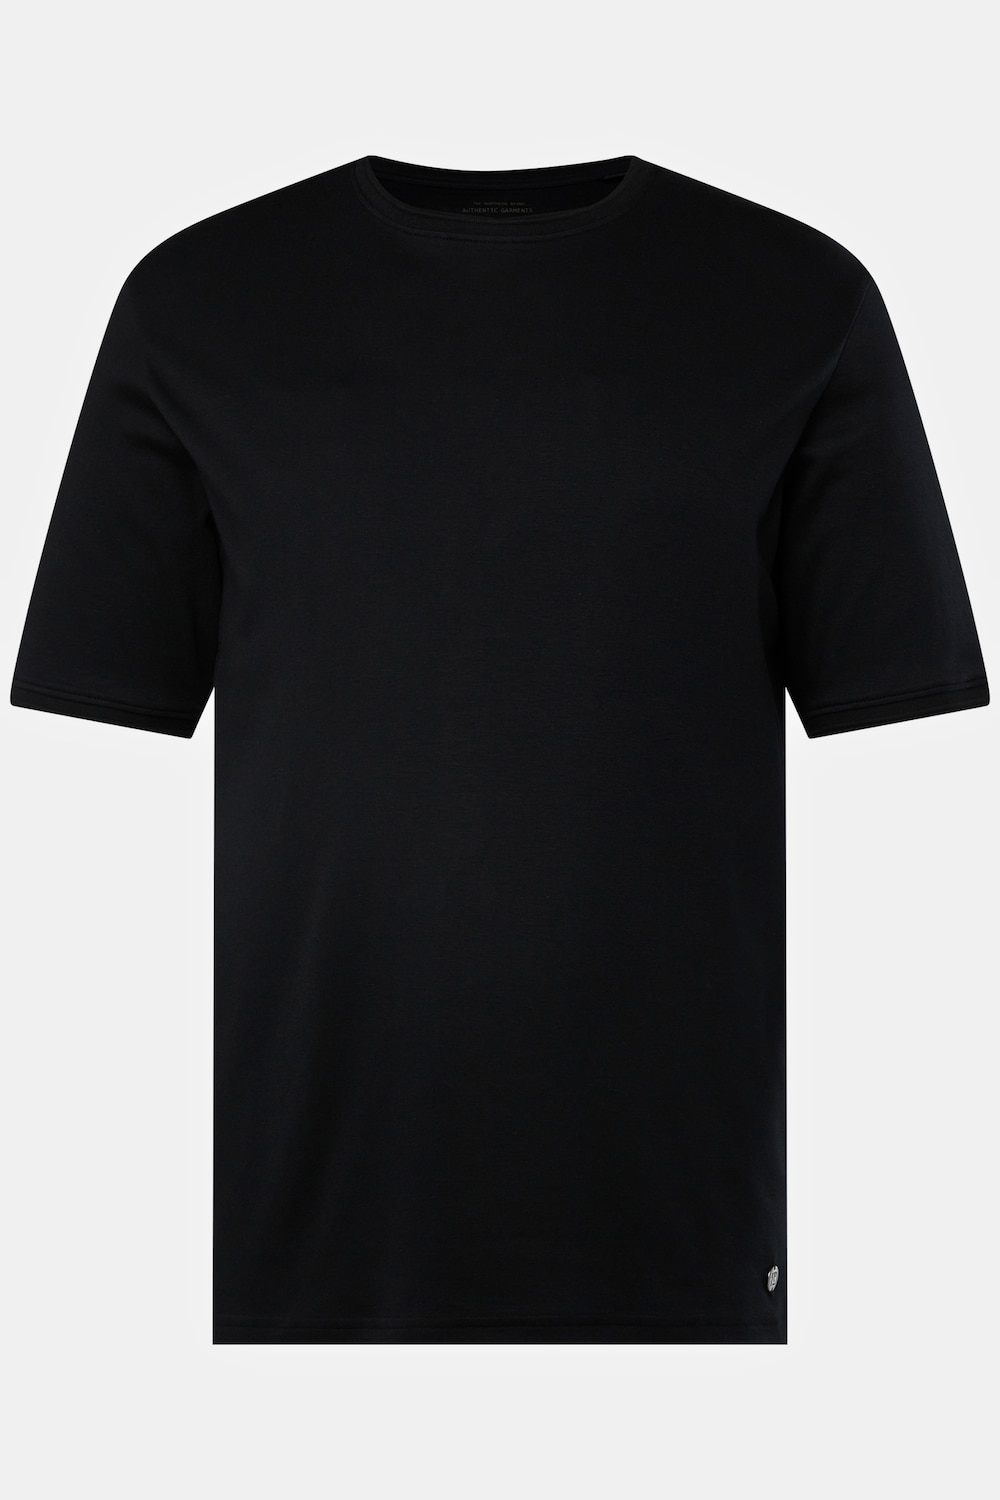 Grote Maten T-shirt, Heren, zwart, Maat: 5XL, Katoen/Viscose, JP1880